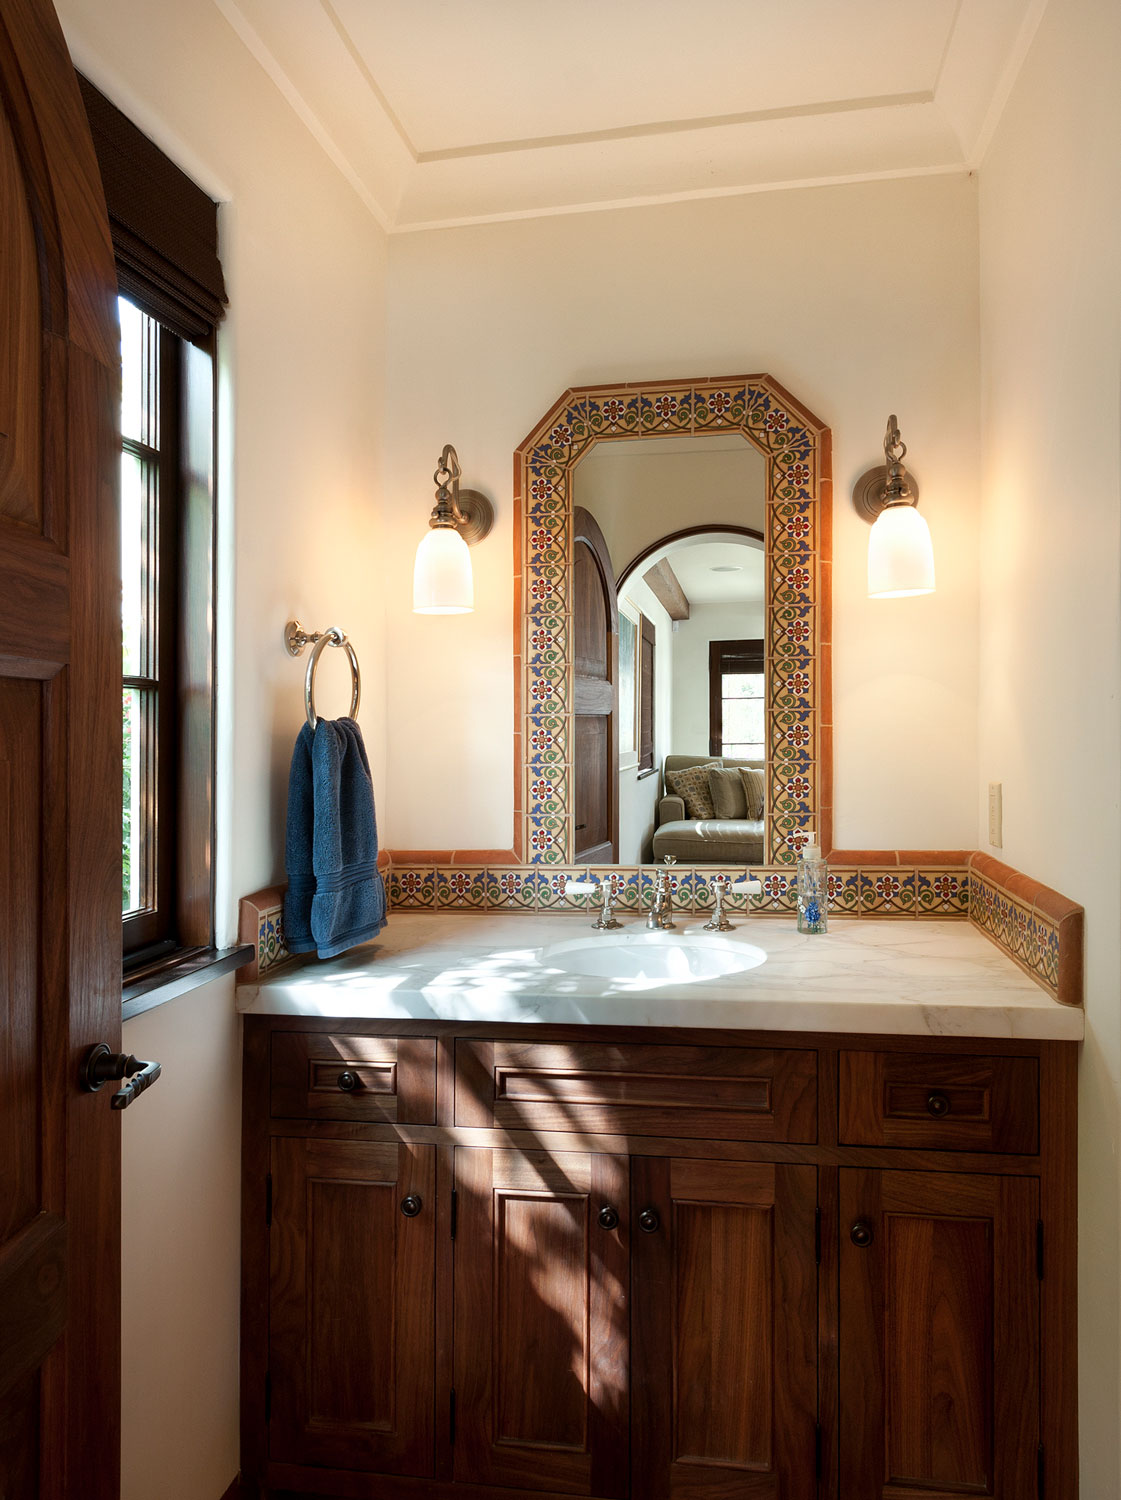 05-contemporary-spanish-bathroom-vanity-tile-mirror-gary-drake-general-contractor.jpg